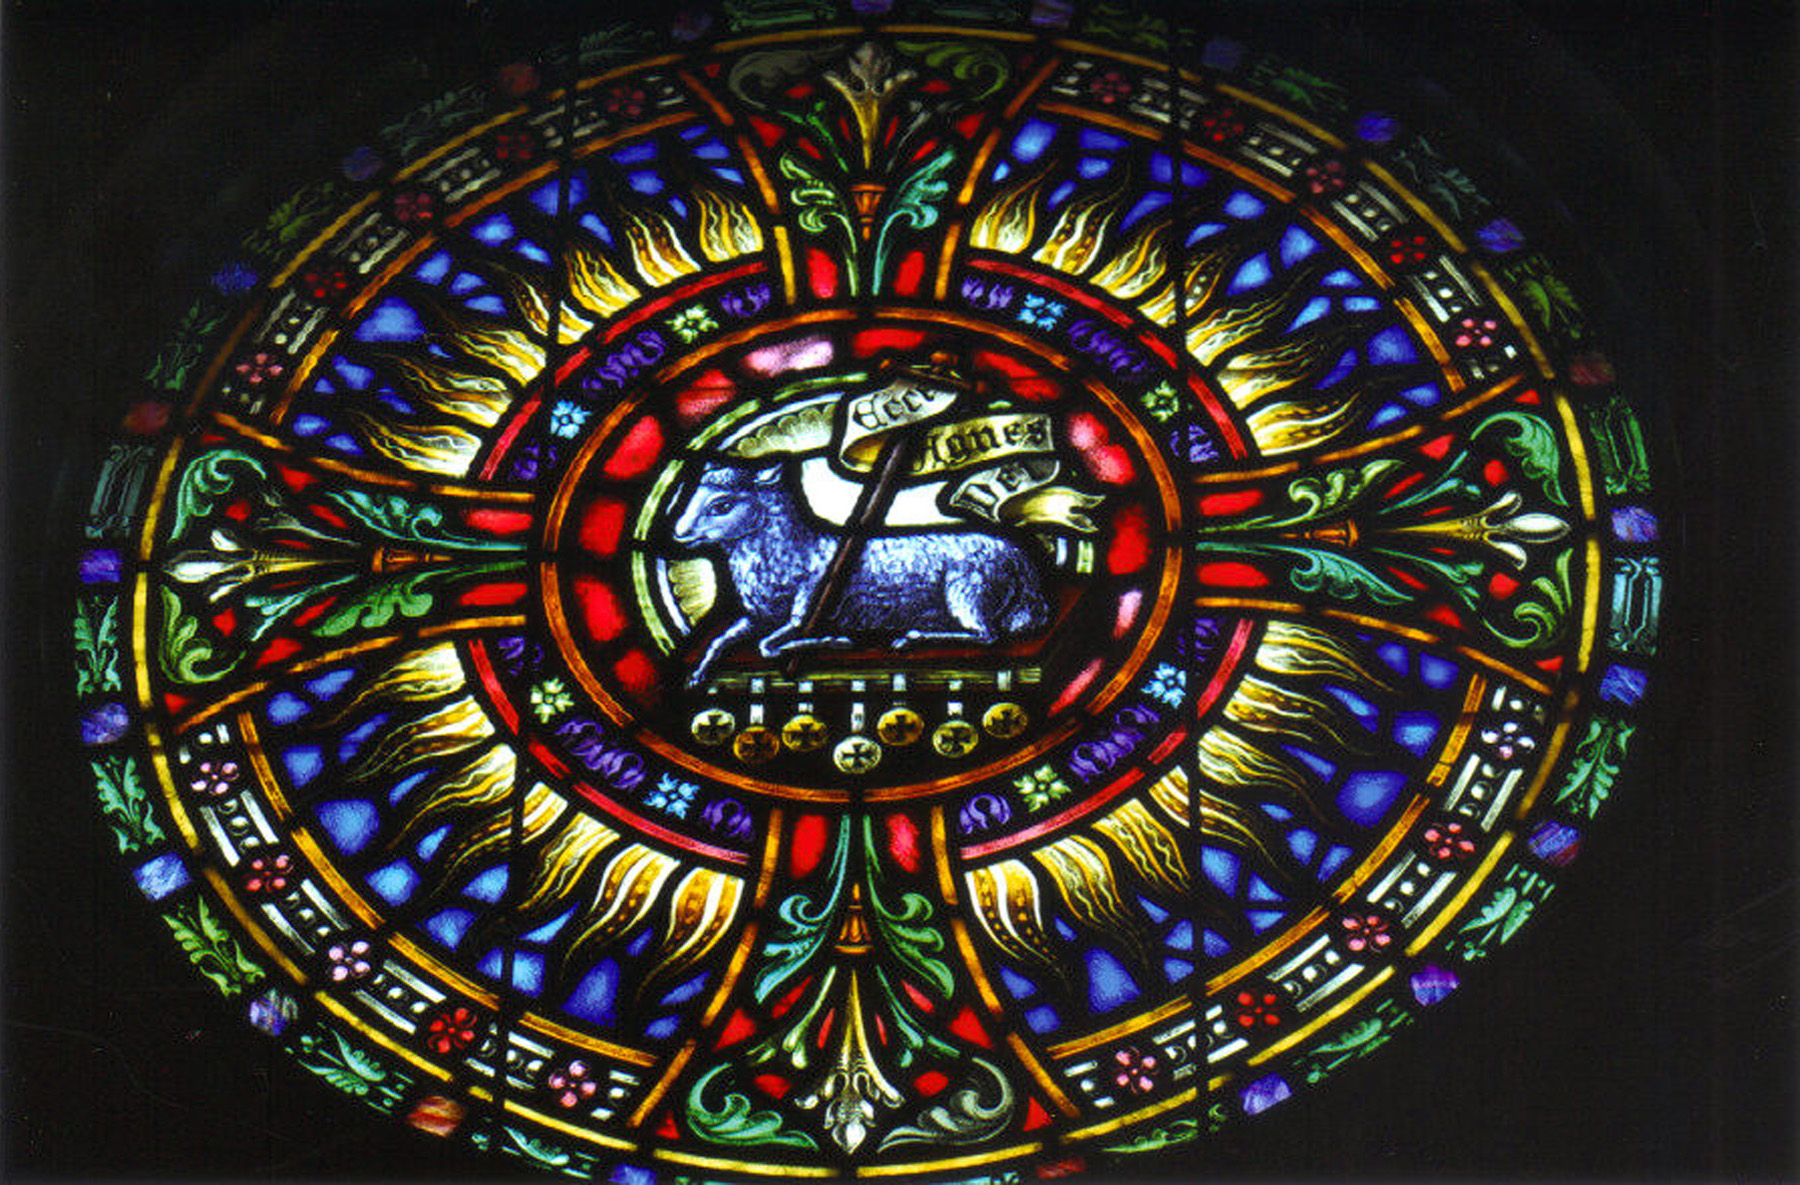 saint gabriel church stained glass window